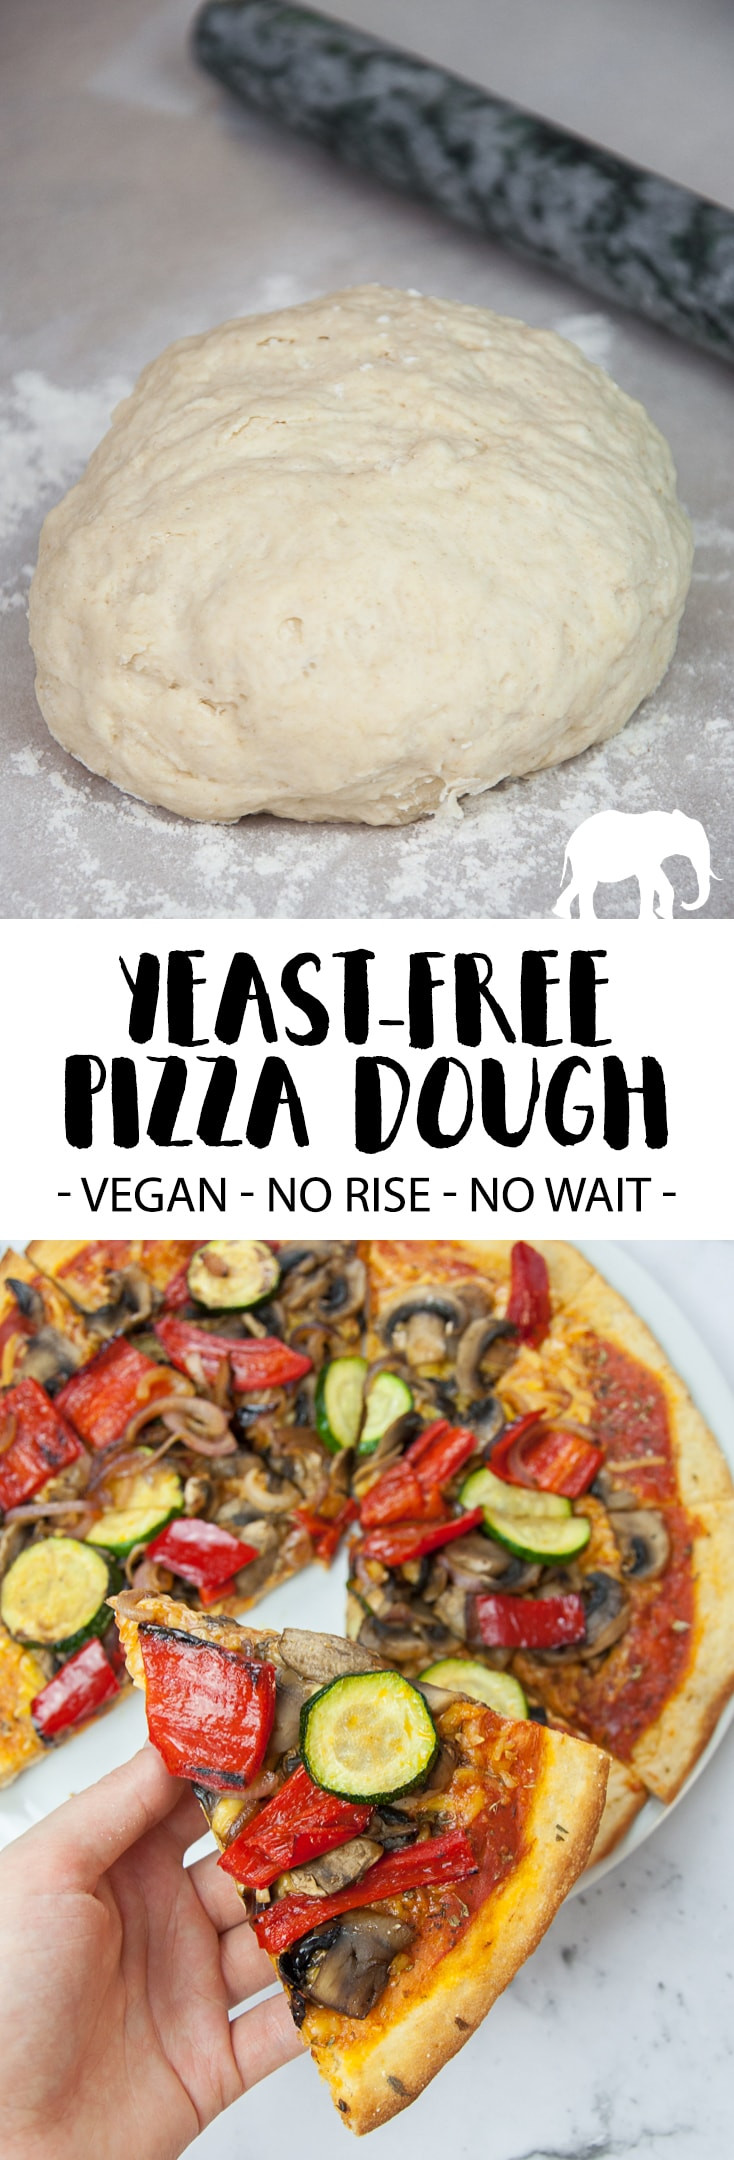 Yeast Free Pizza Dough Recipe
 Yeast Free Vegan Pizza Dough Recipe